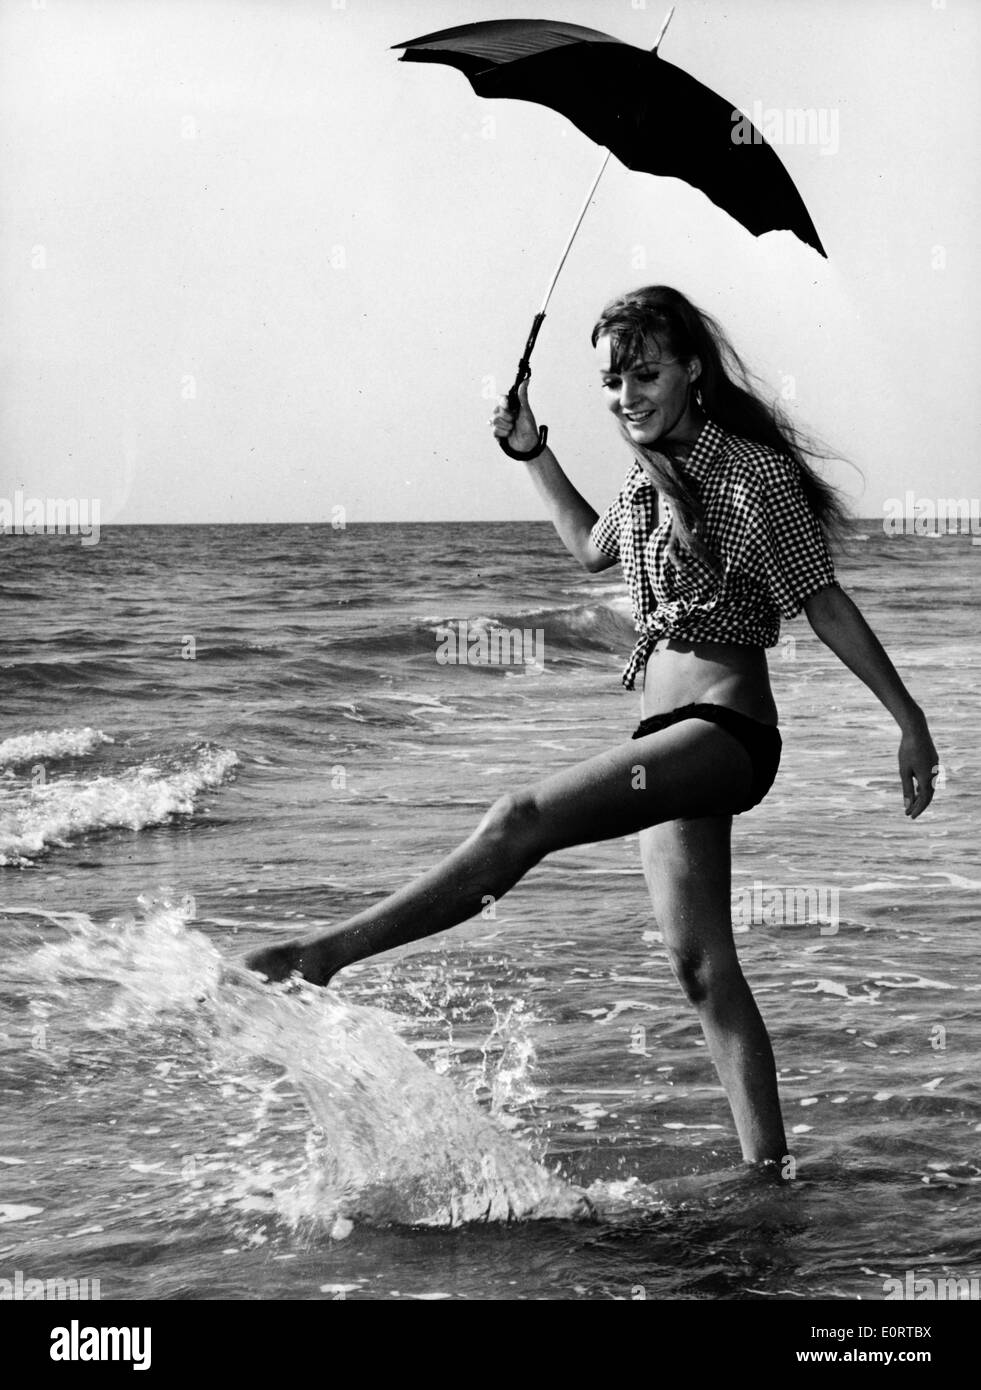 Portrait of Heidi Fischer splashing in the waves at the beach Stock Photo